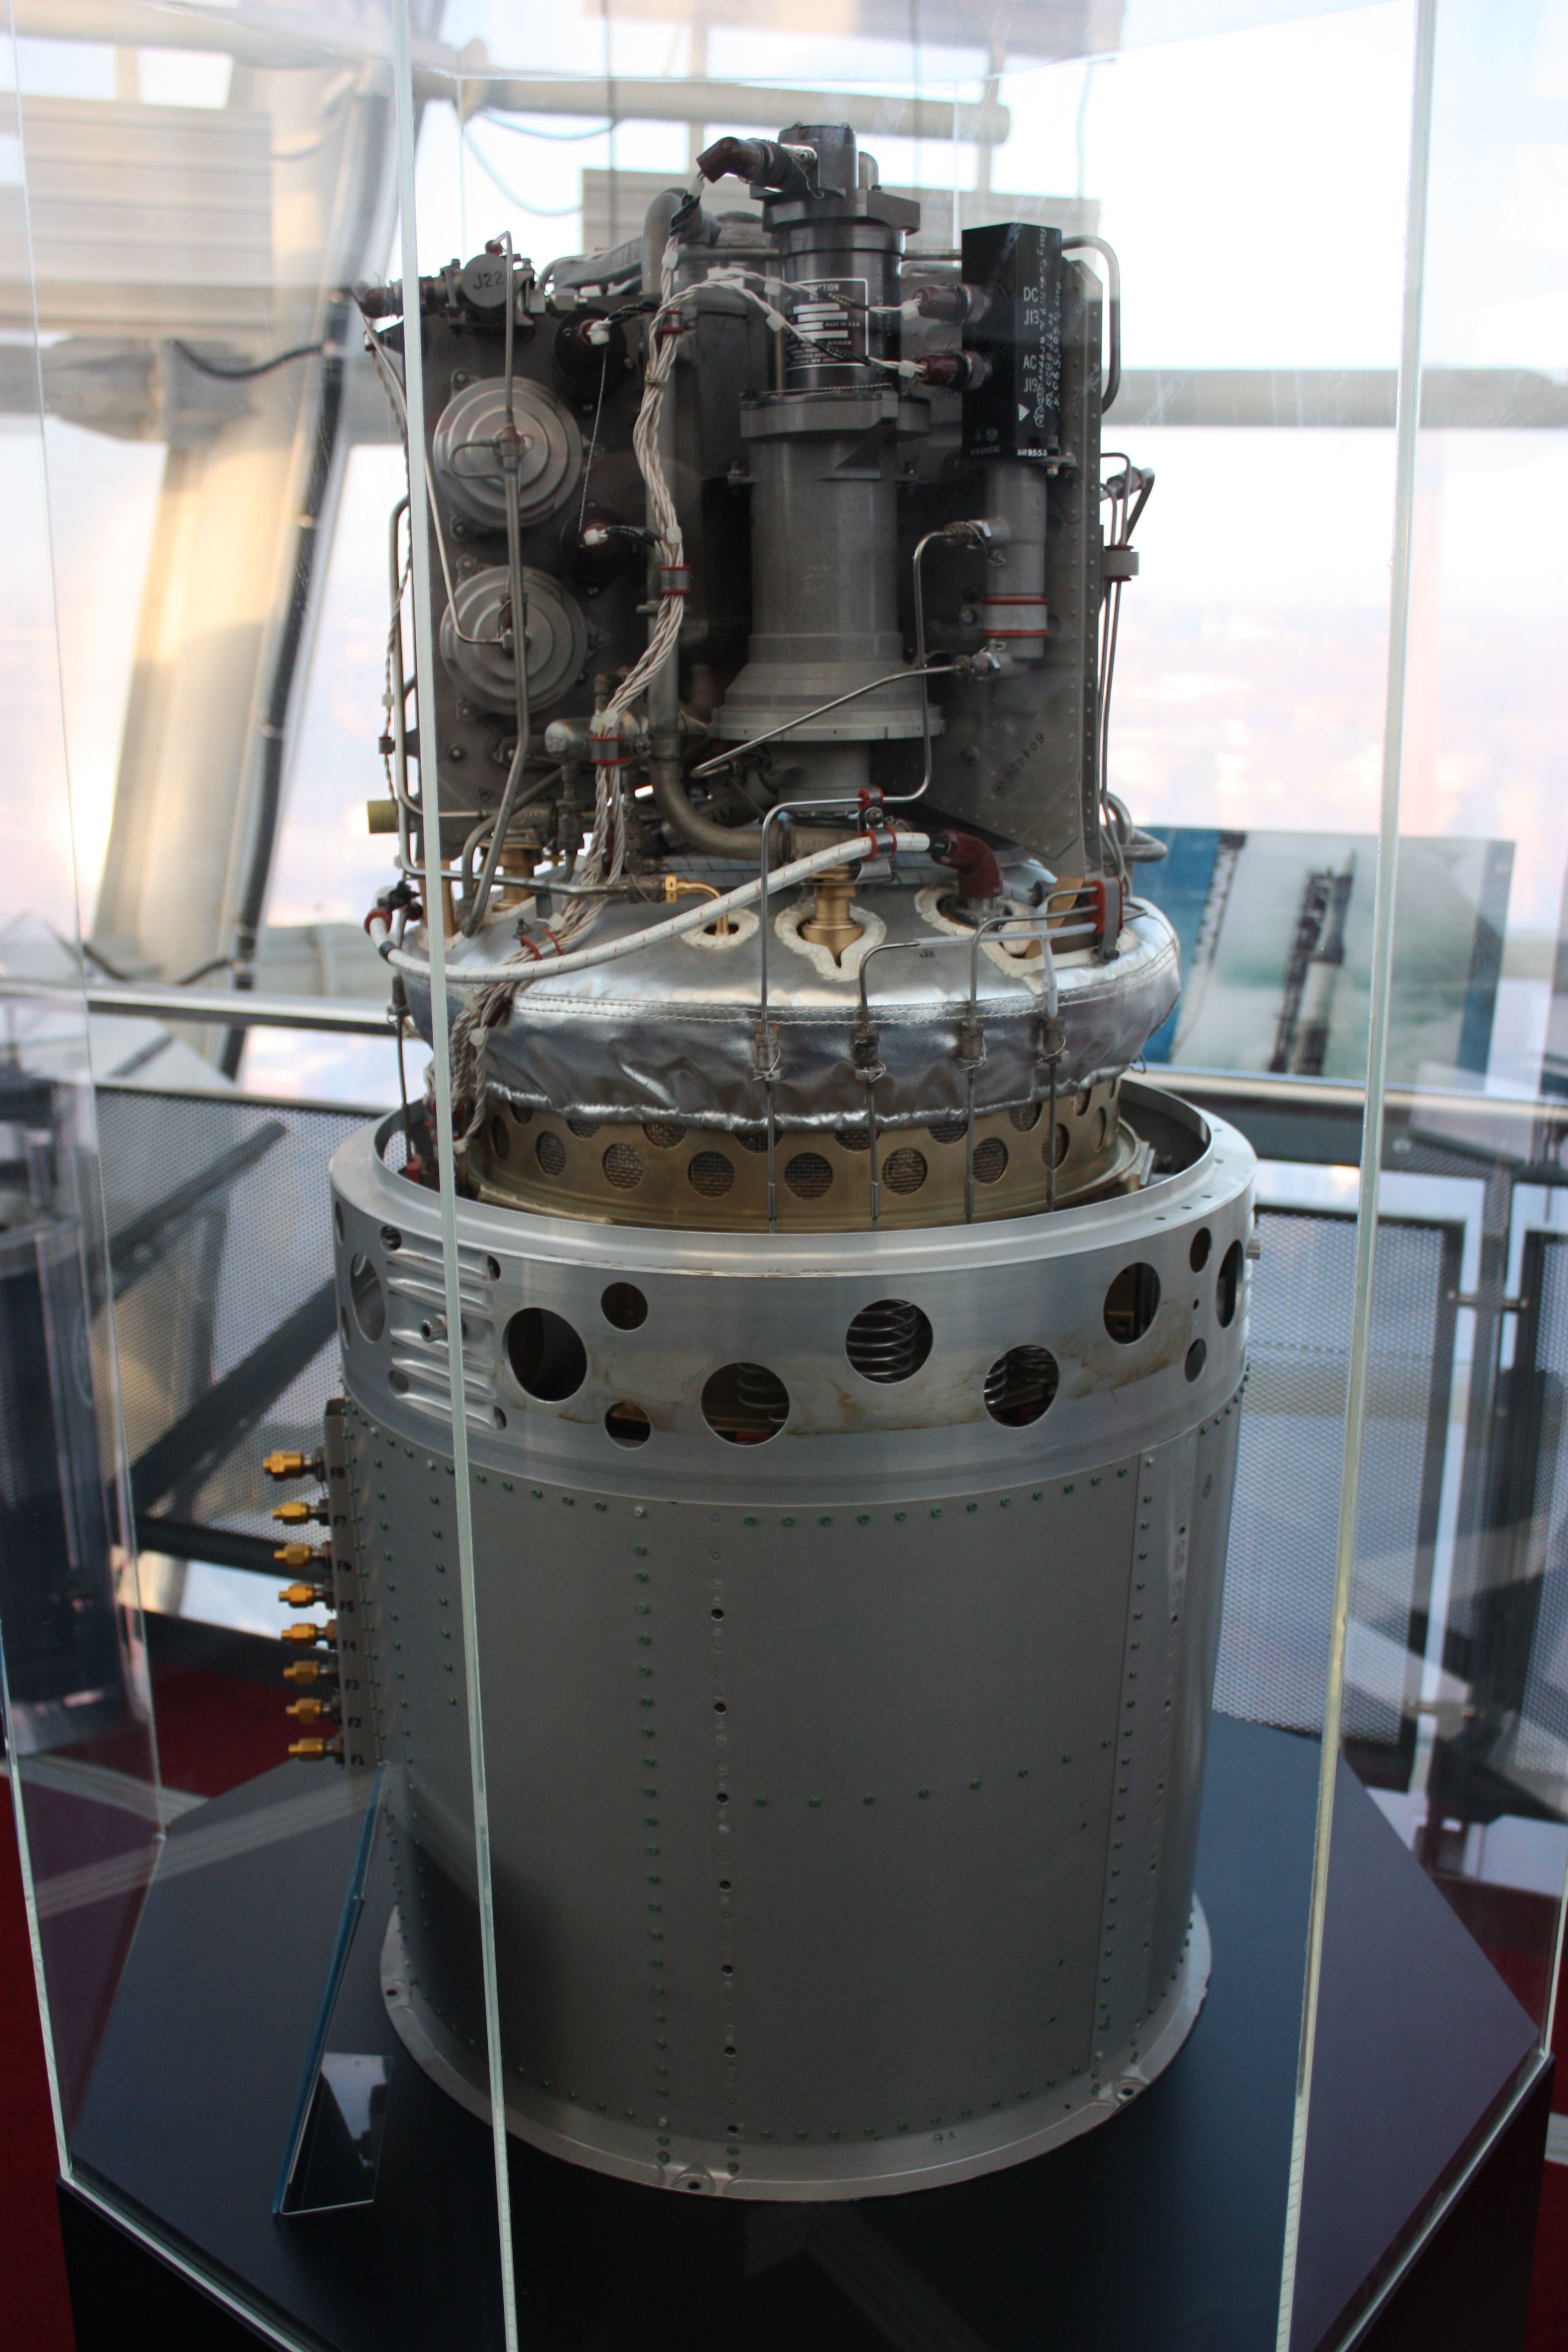 AleaSoft - Celda combustible hidrógeno Apolo 11